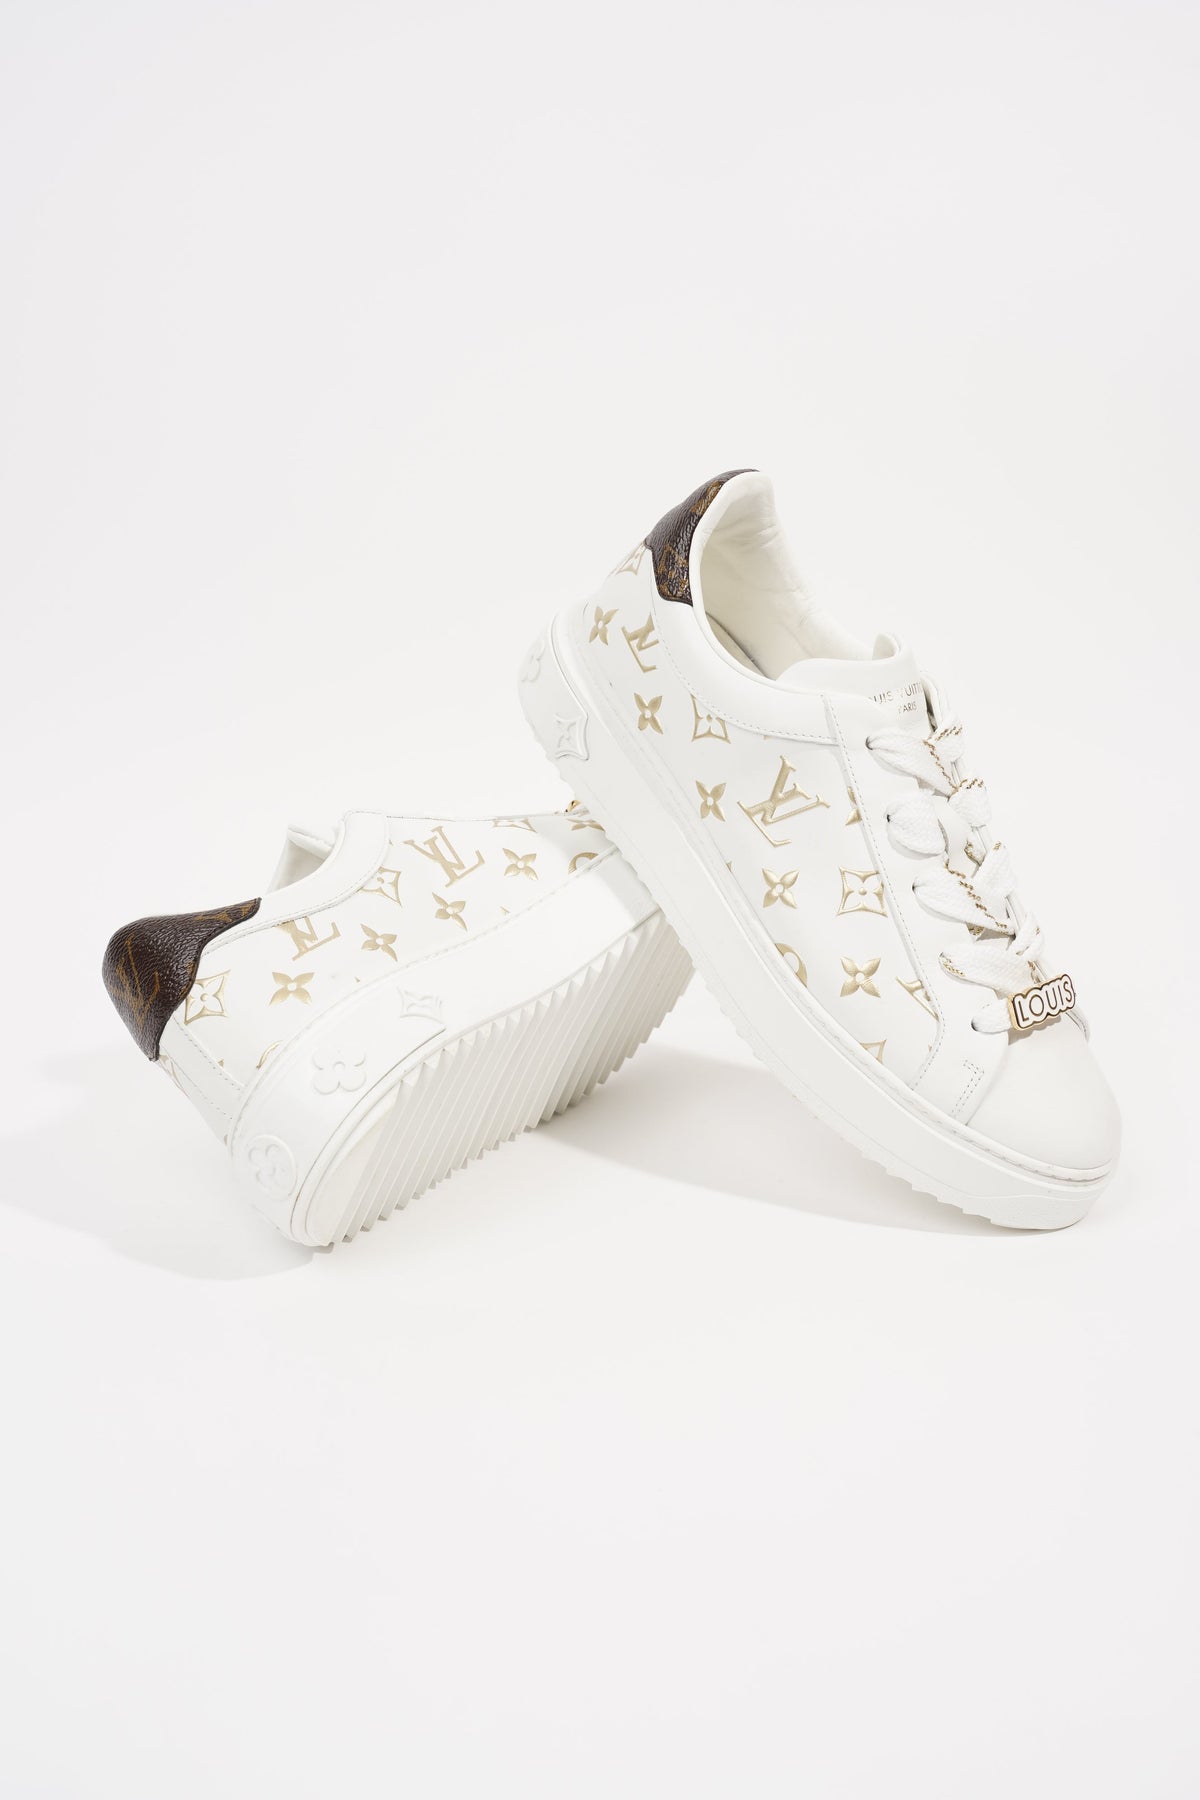 Louis Vuitton Time Out Sneaker White. Size 40.0